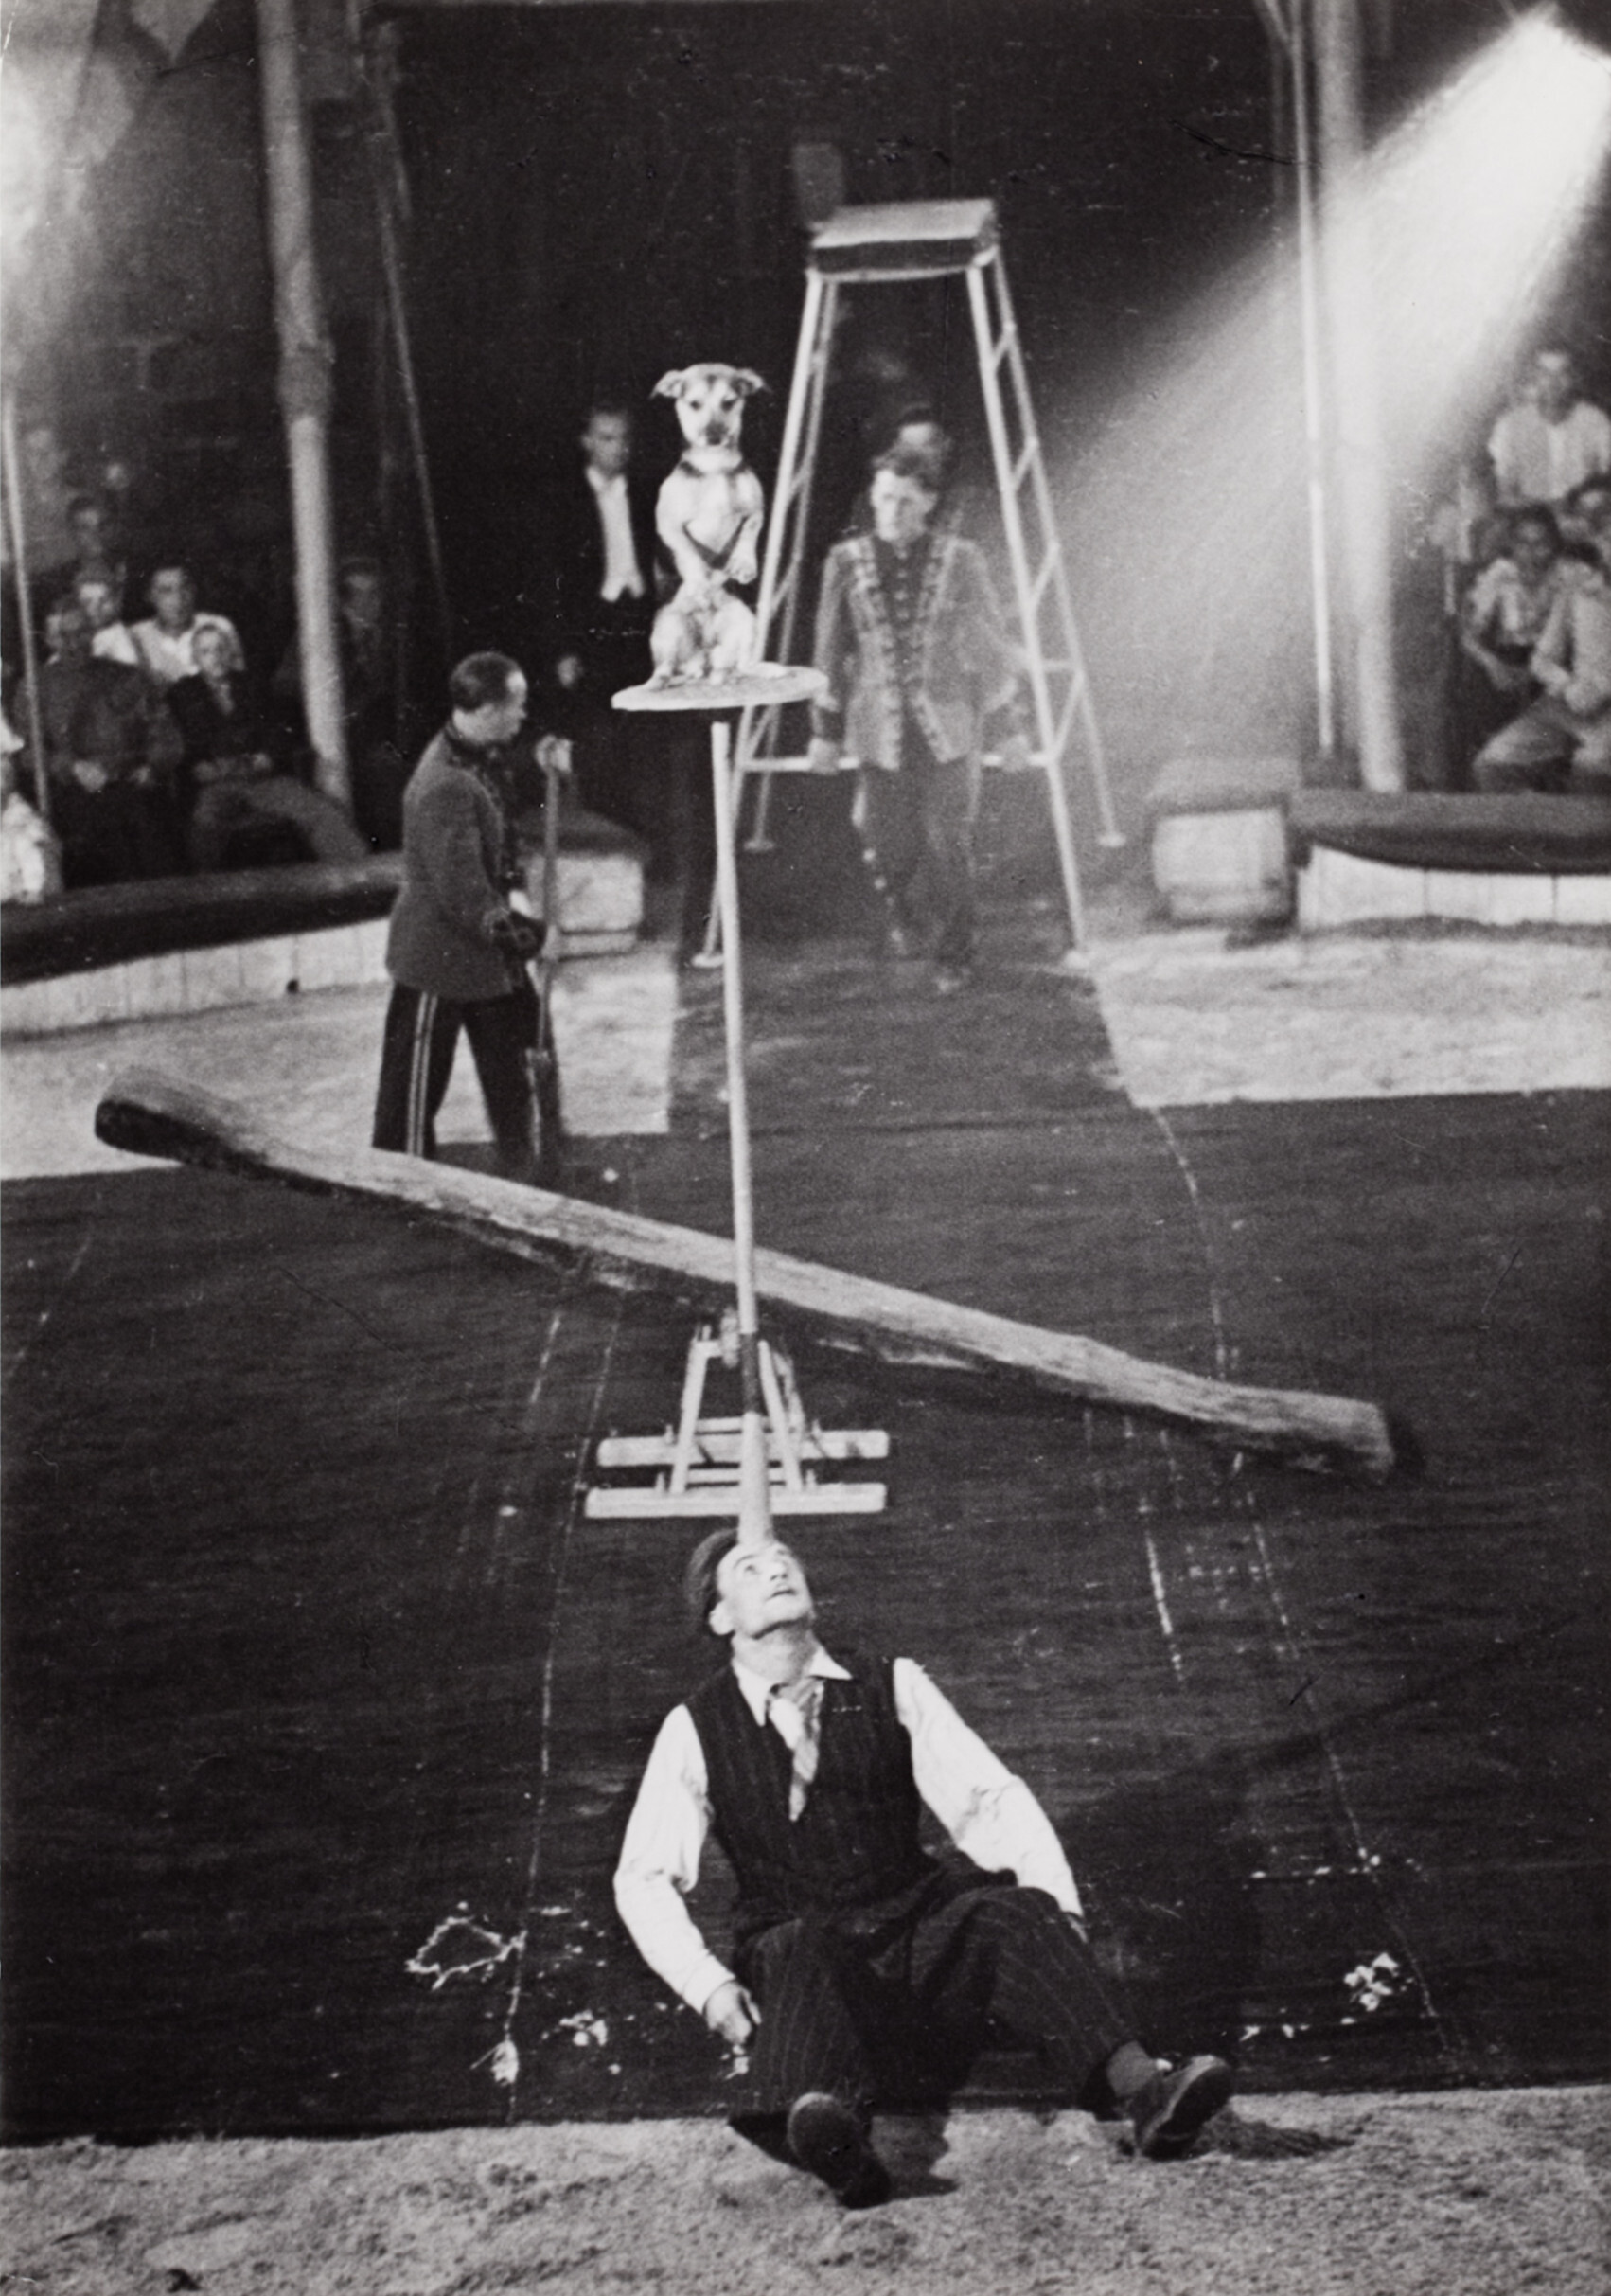 Клоун балансирует собаку на голове в цирковом номере, Киев, 1947 год. Фотограф Роберт Капа